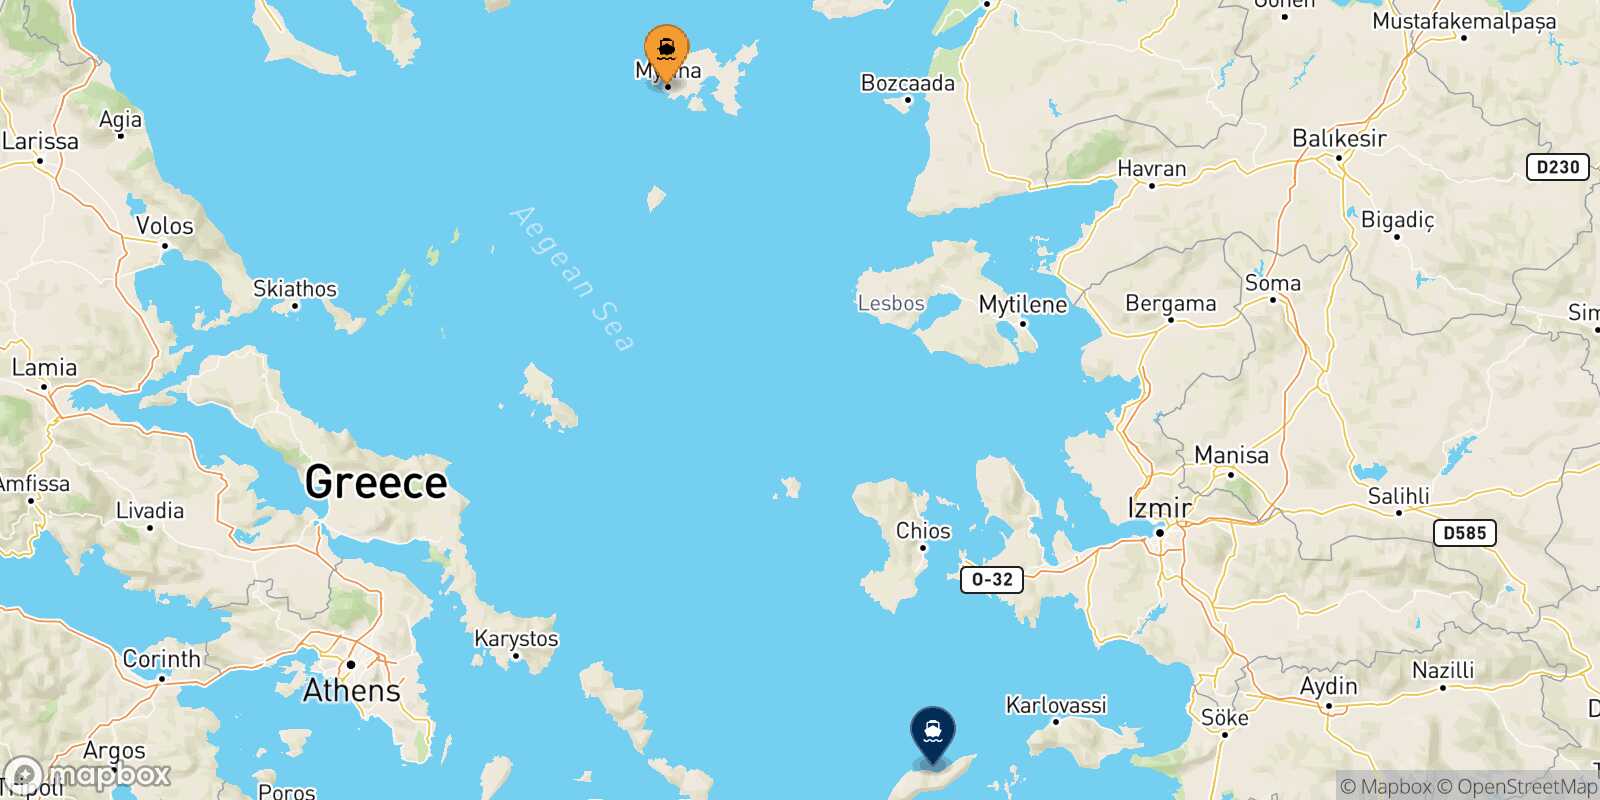 Myrina (Limnos) Evdilos (Ikaria) route map